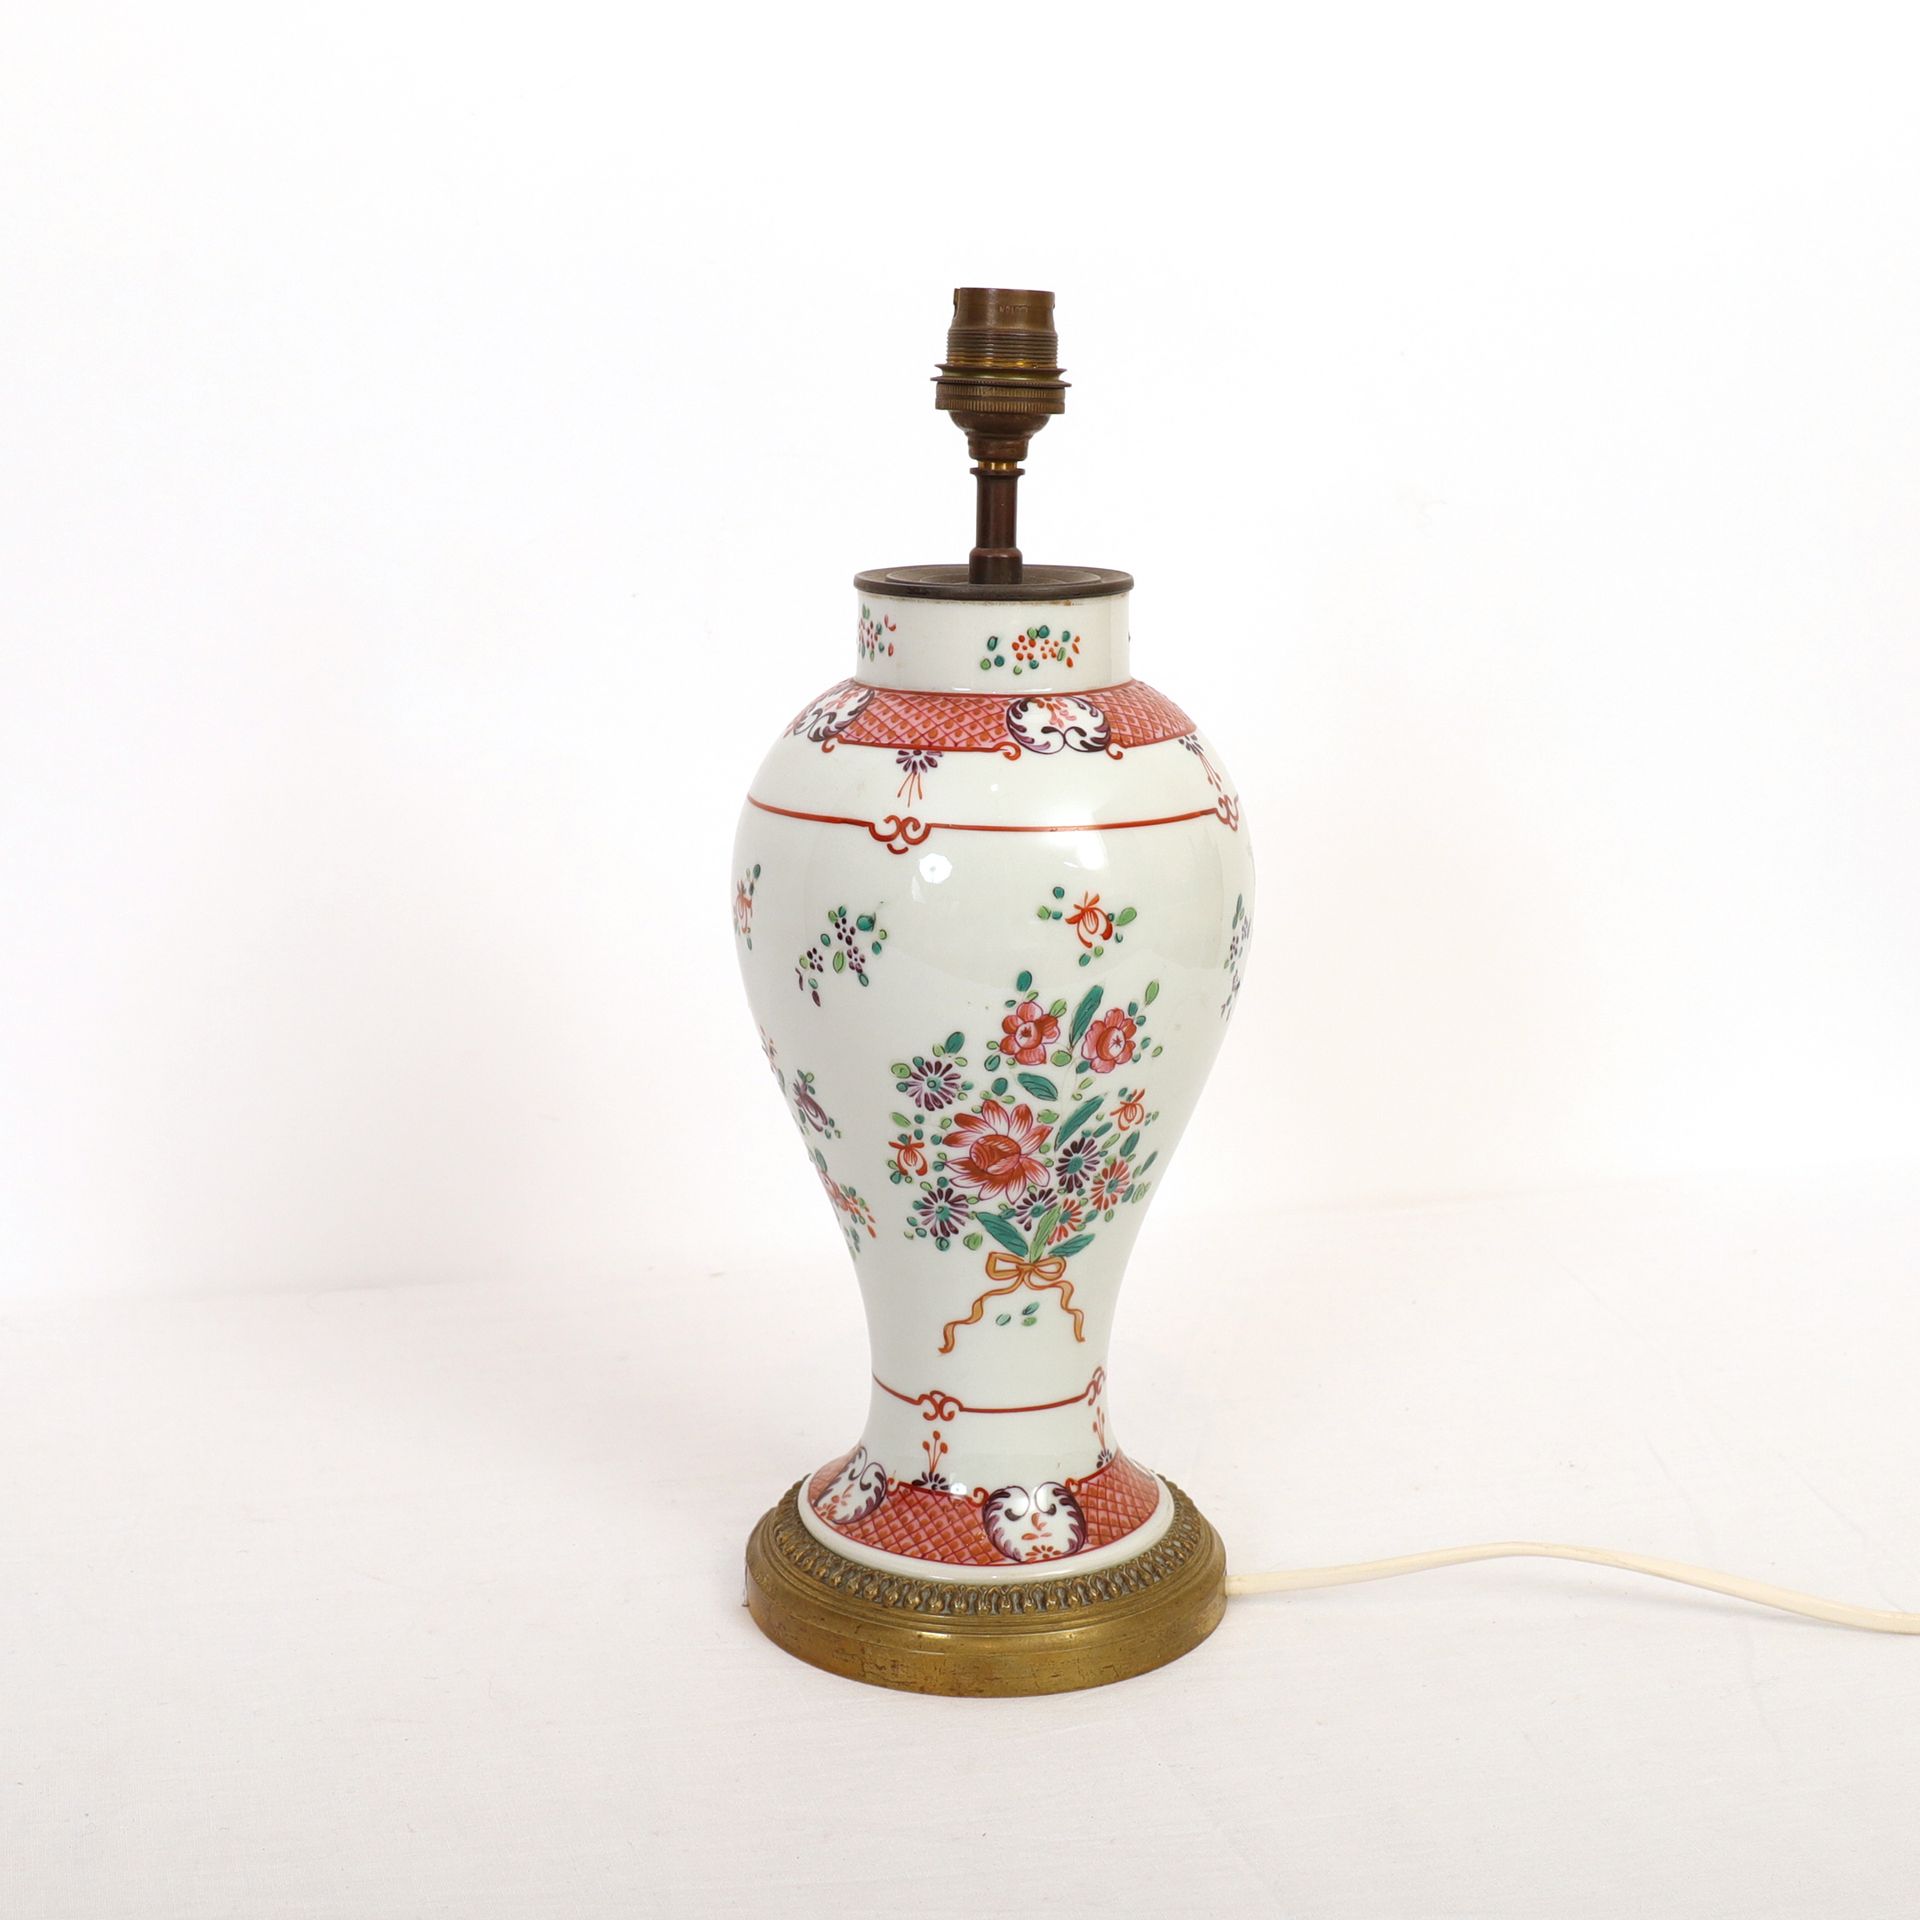 Null 玫瑰花瓶，中国

瓷器上的多色珐琅彩，封面为花束和几何楣饰

中国。清朝时期。18世纪

高：33厘米

底部的鎏金青铜安装，并安装成一盏灯